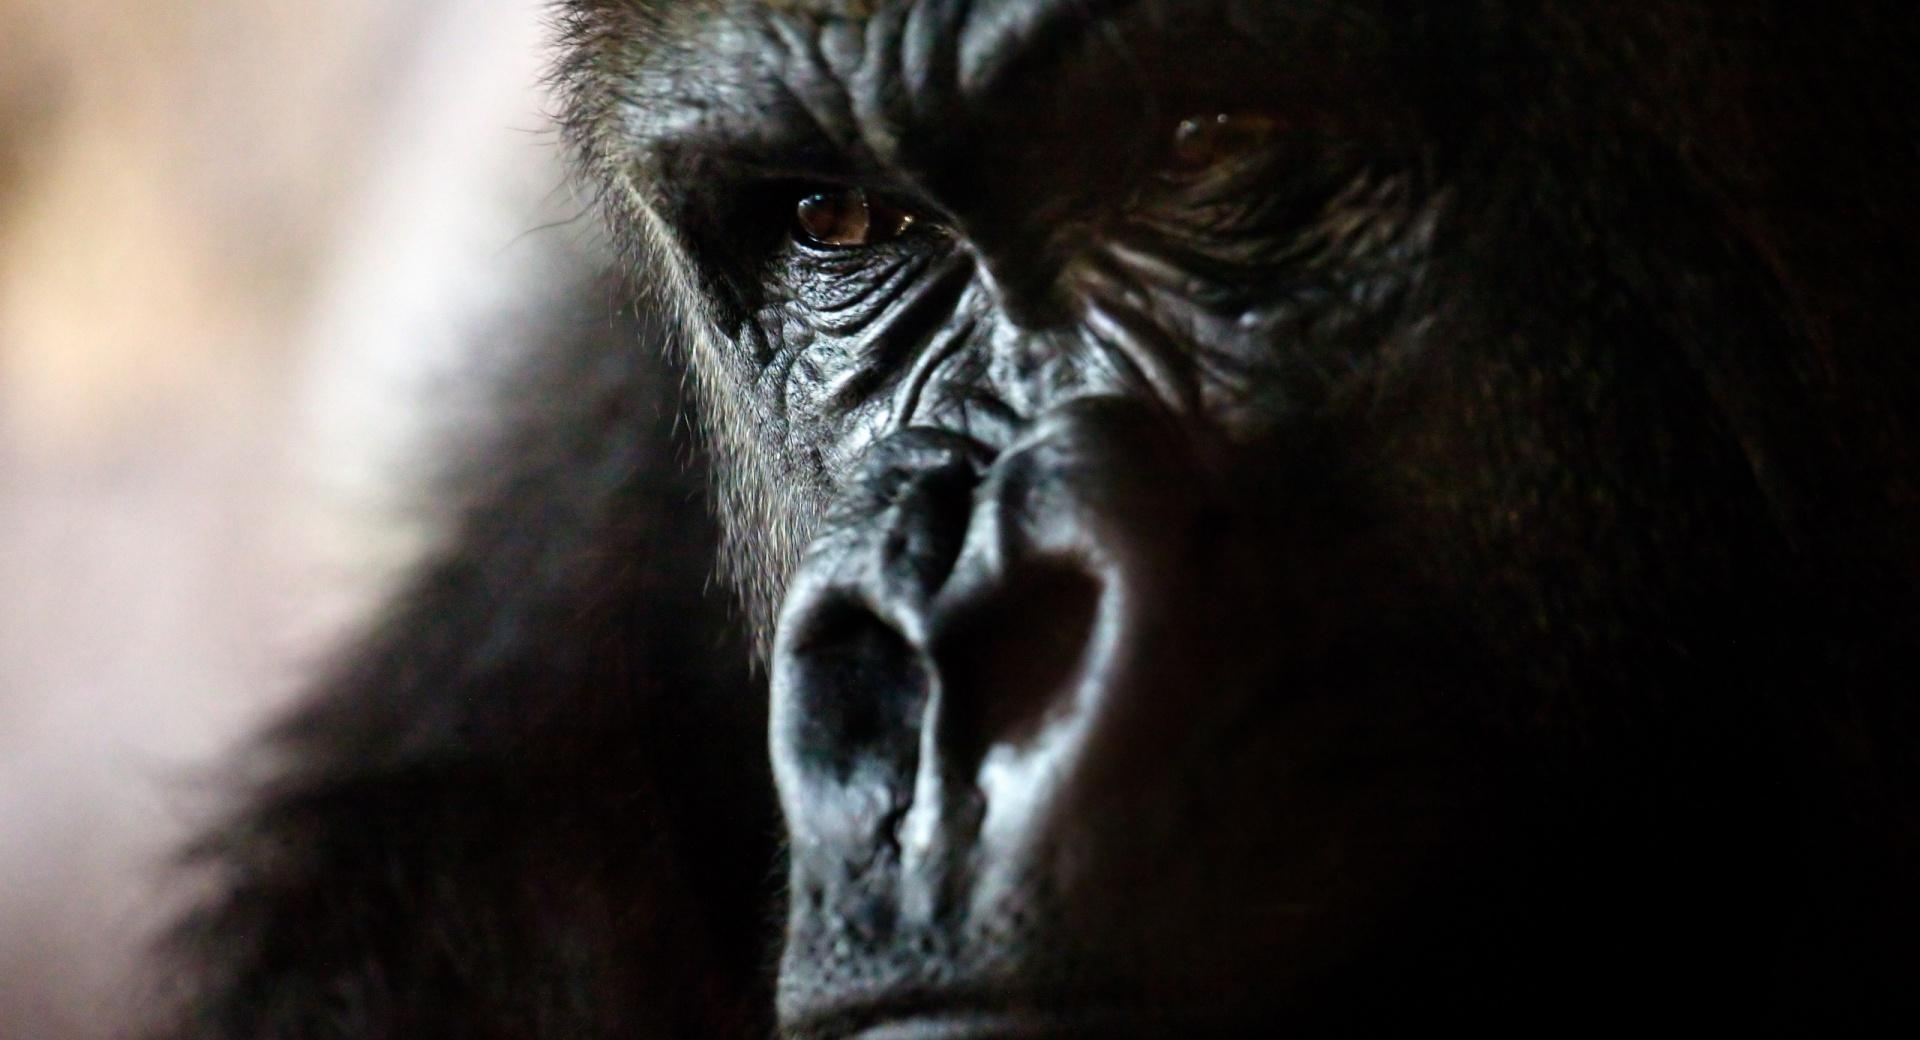 Gorilla Portrait at 2048 x 2048 iPad size wallpapers HD quality